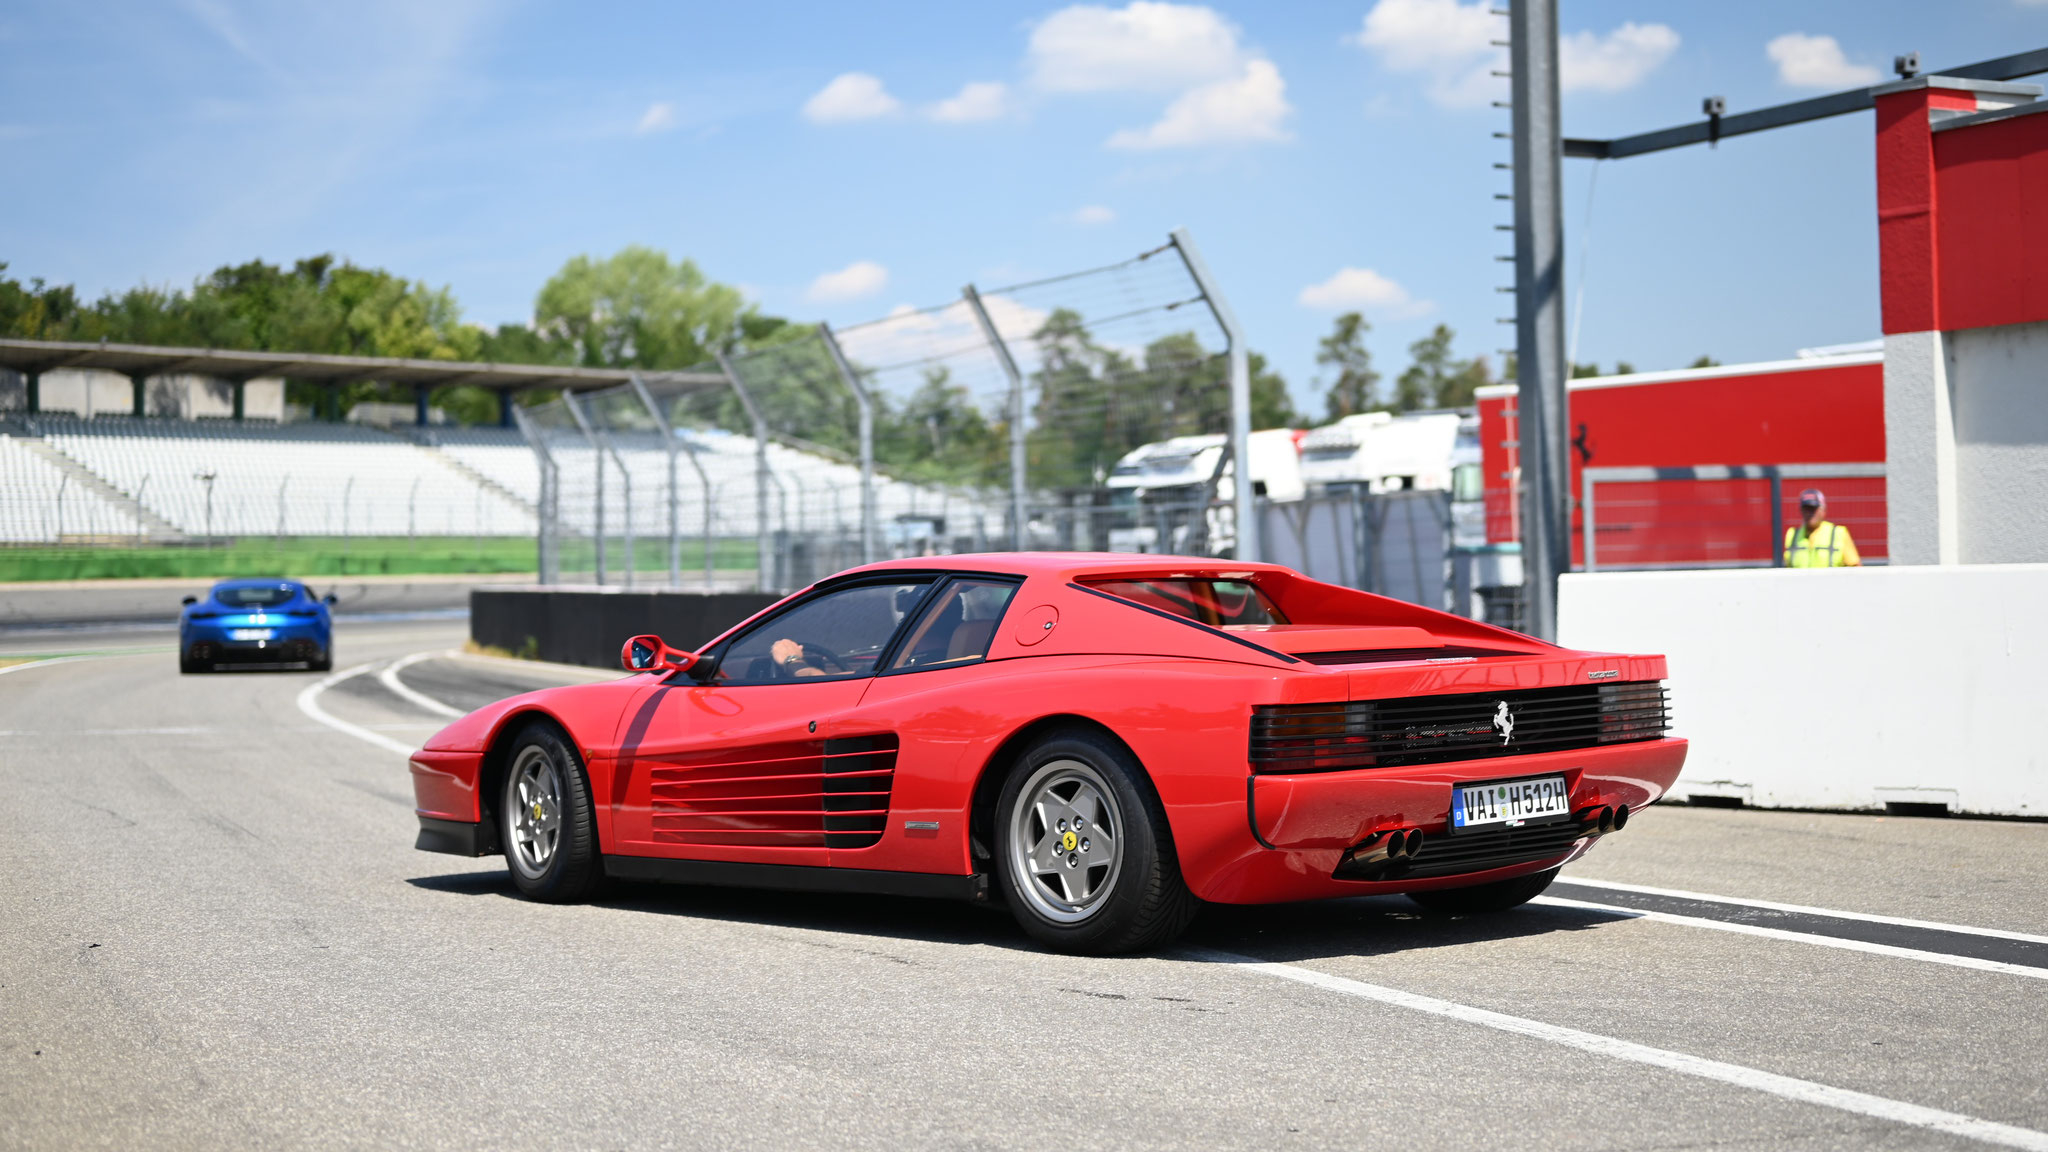 Ferrari testarossa - VAI-H512H